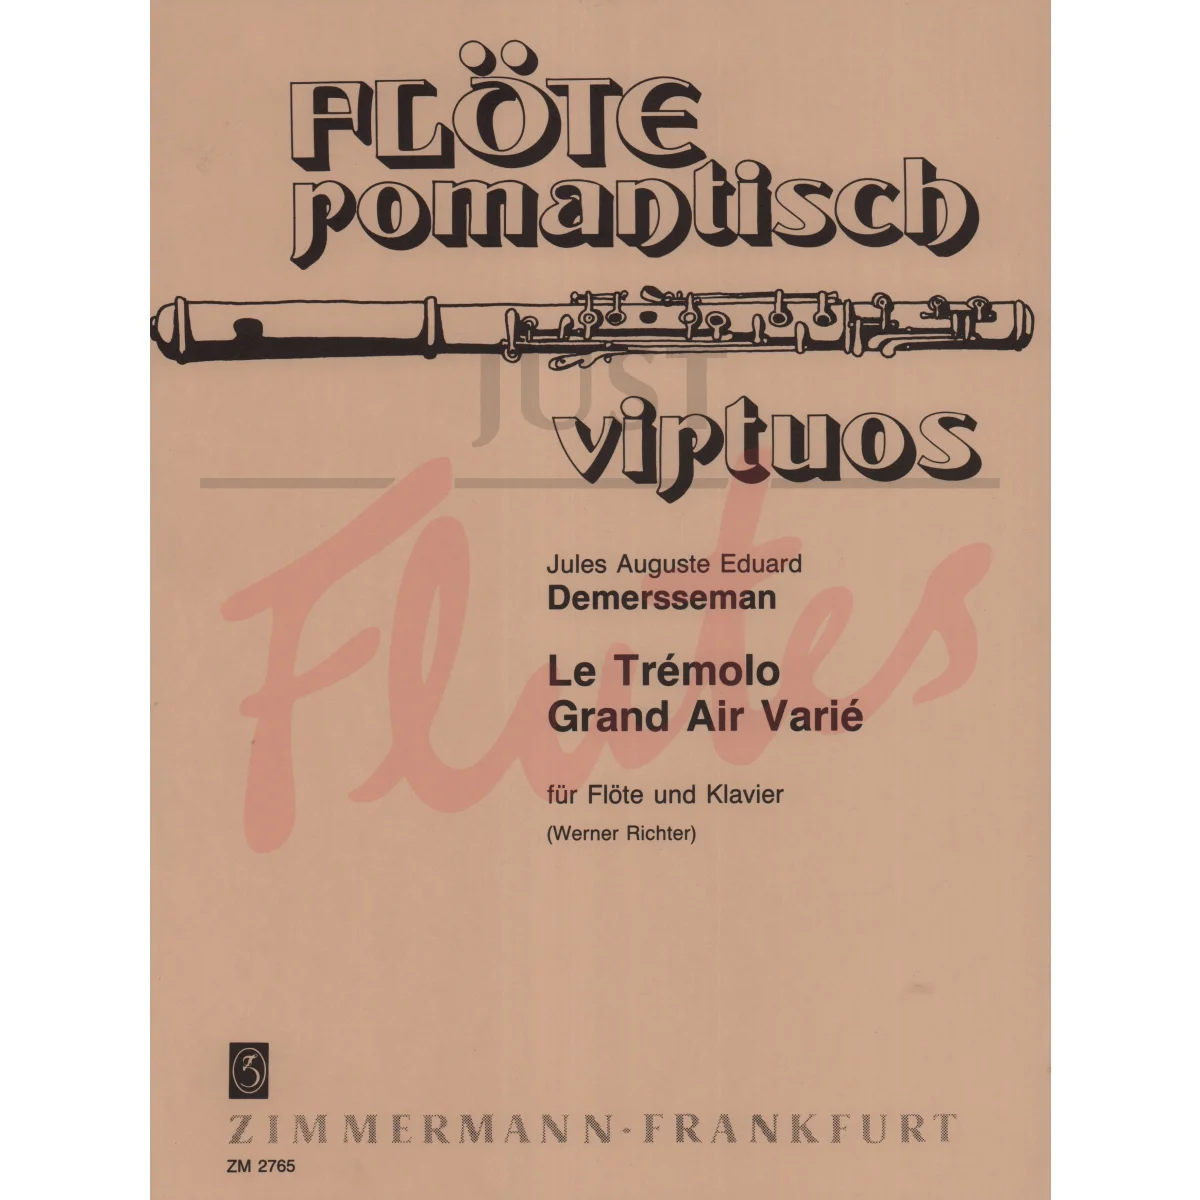 Le Trémolo Grand Air Varié for Flute and Piano